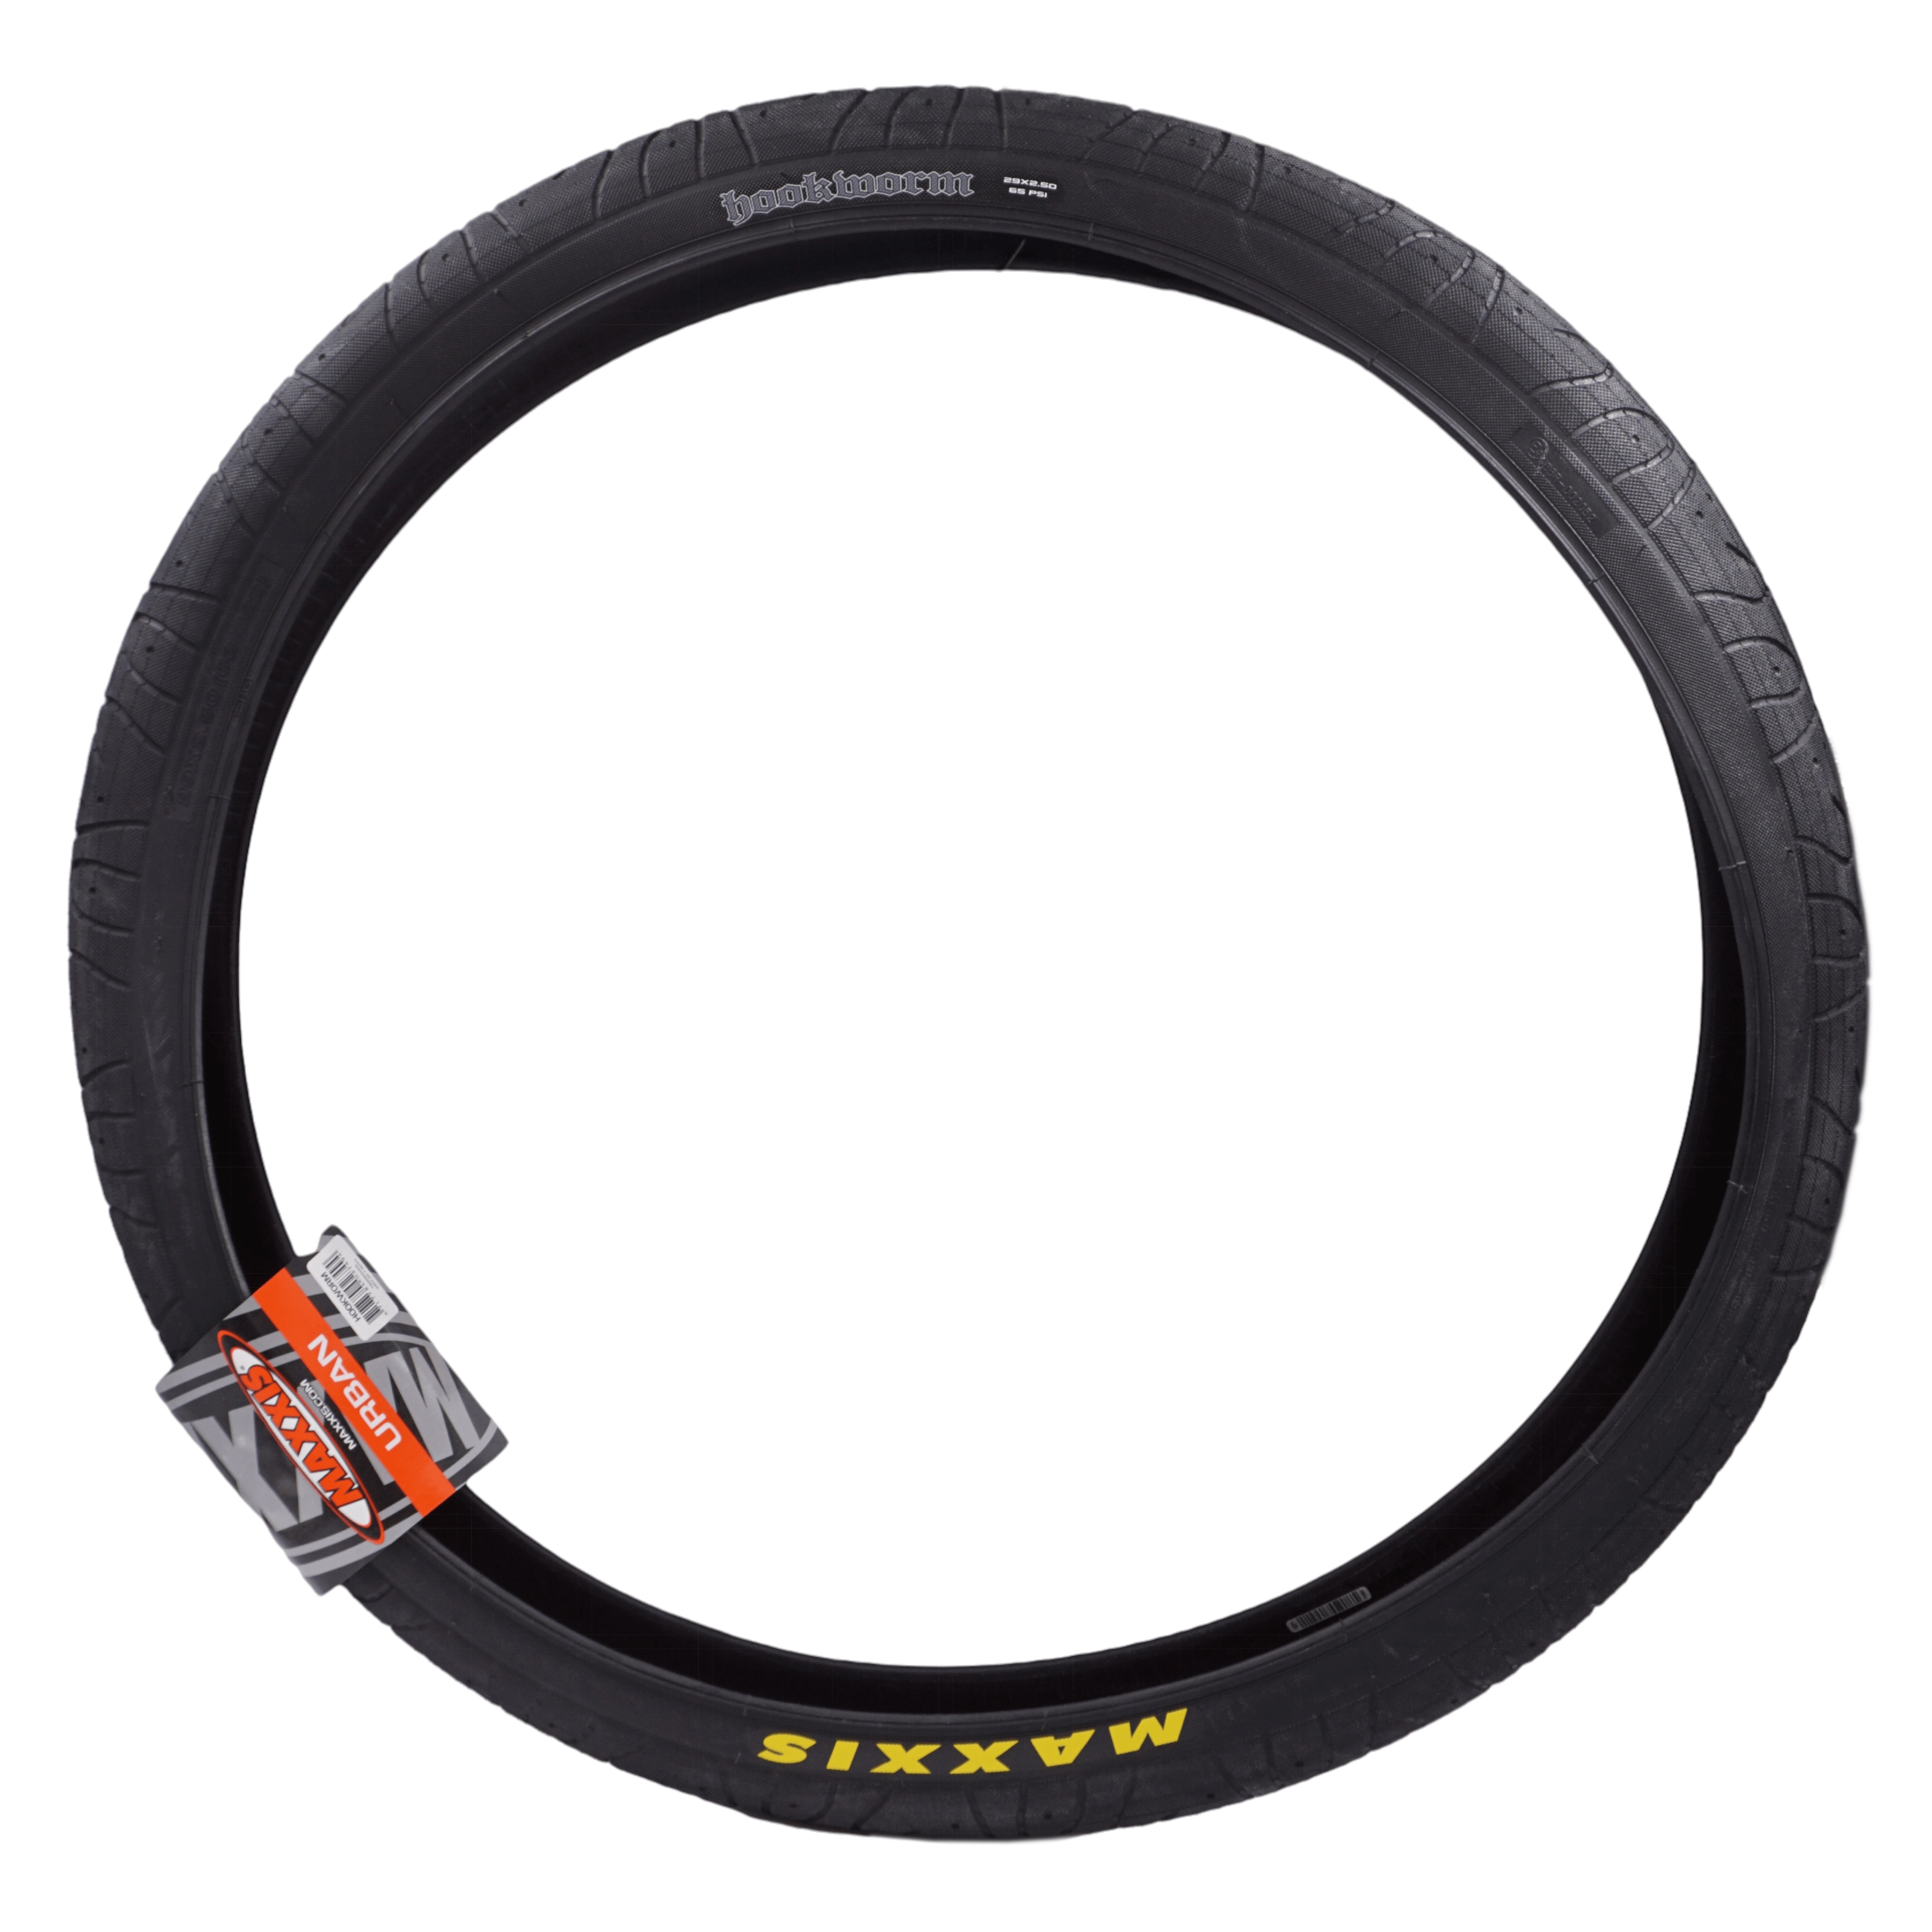 Maxxis Hookworm 29x2.5 Tire - The Bikesmiths